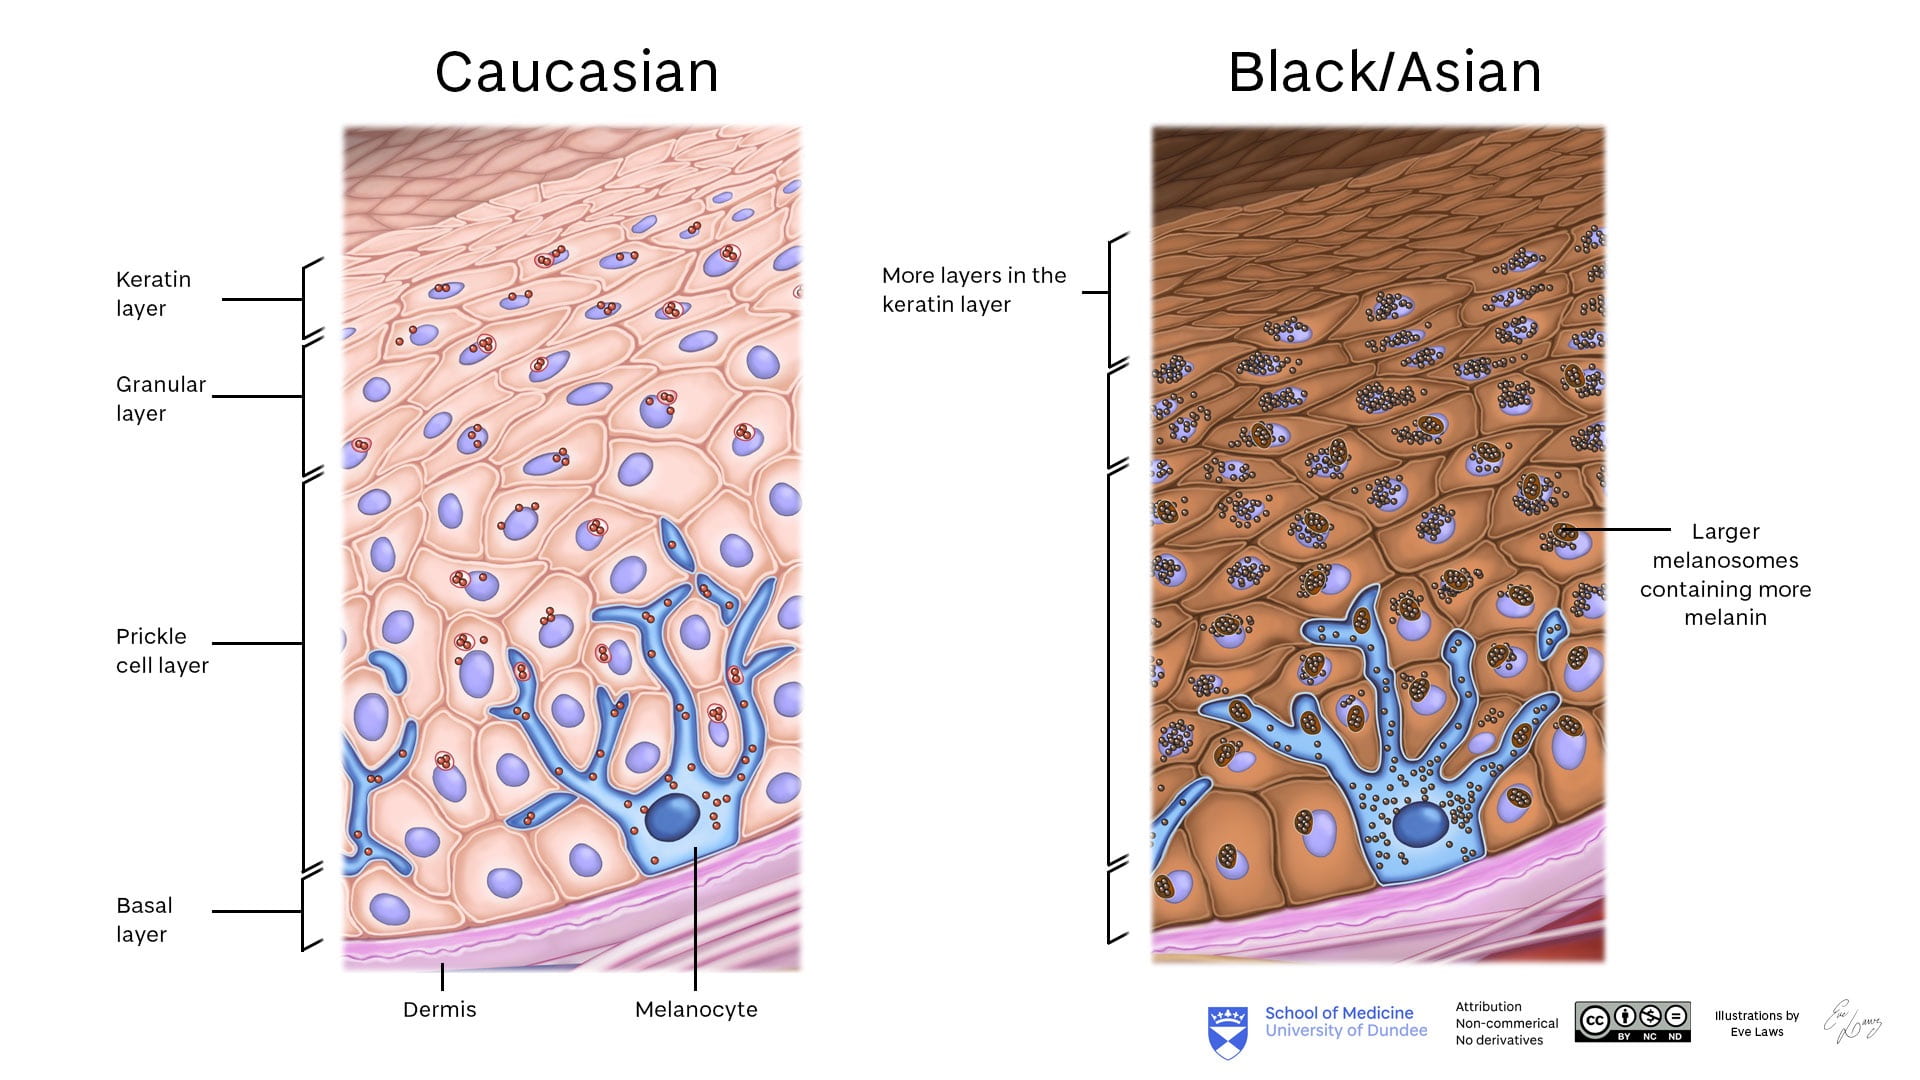 Melanin production in caucasian v asian/black skin